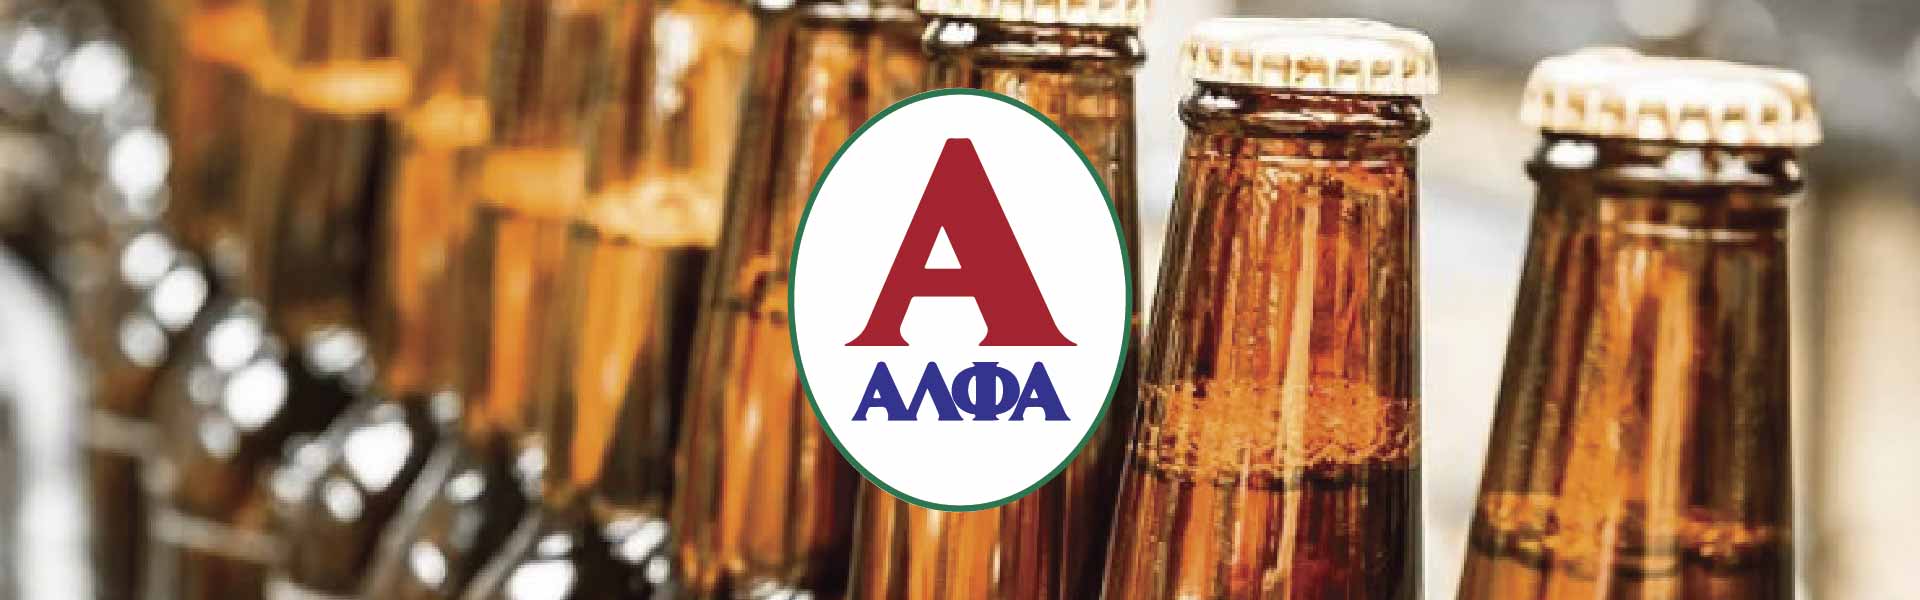 Alfa Brewery